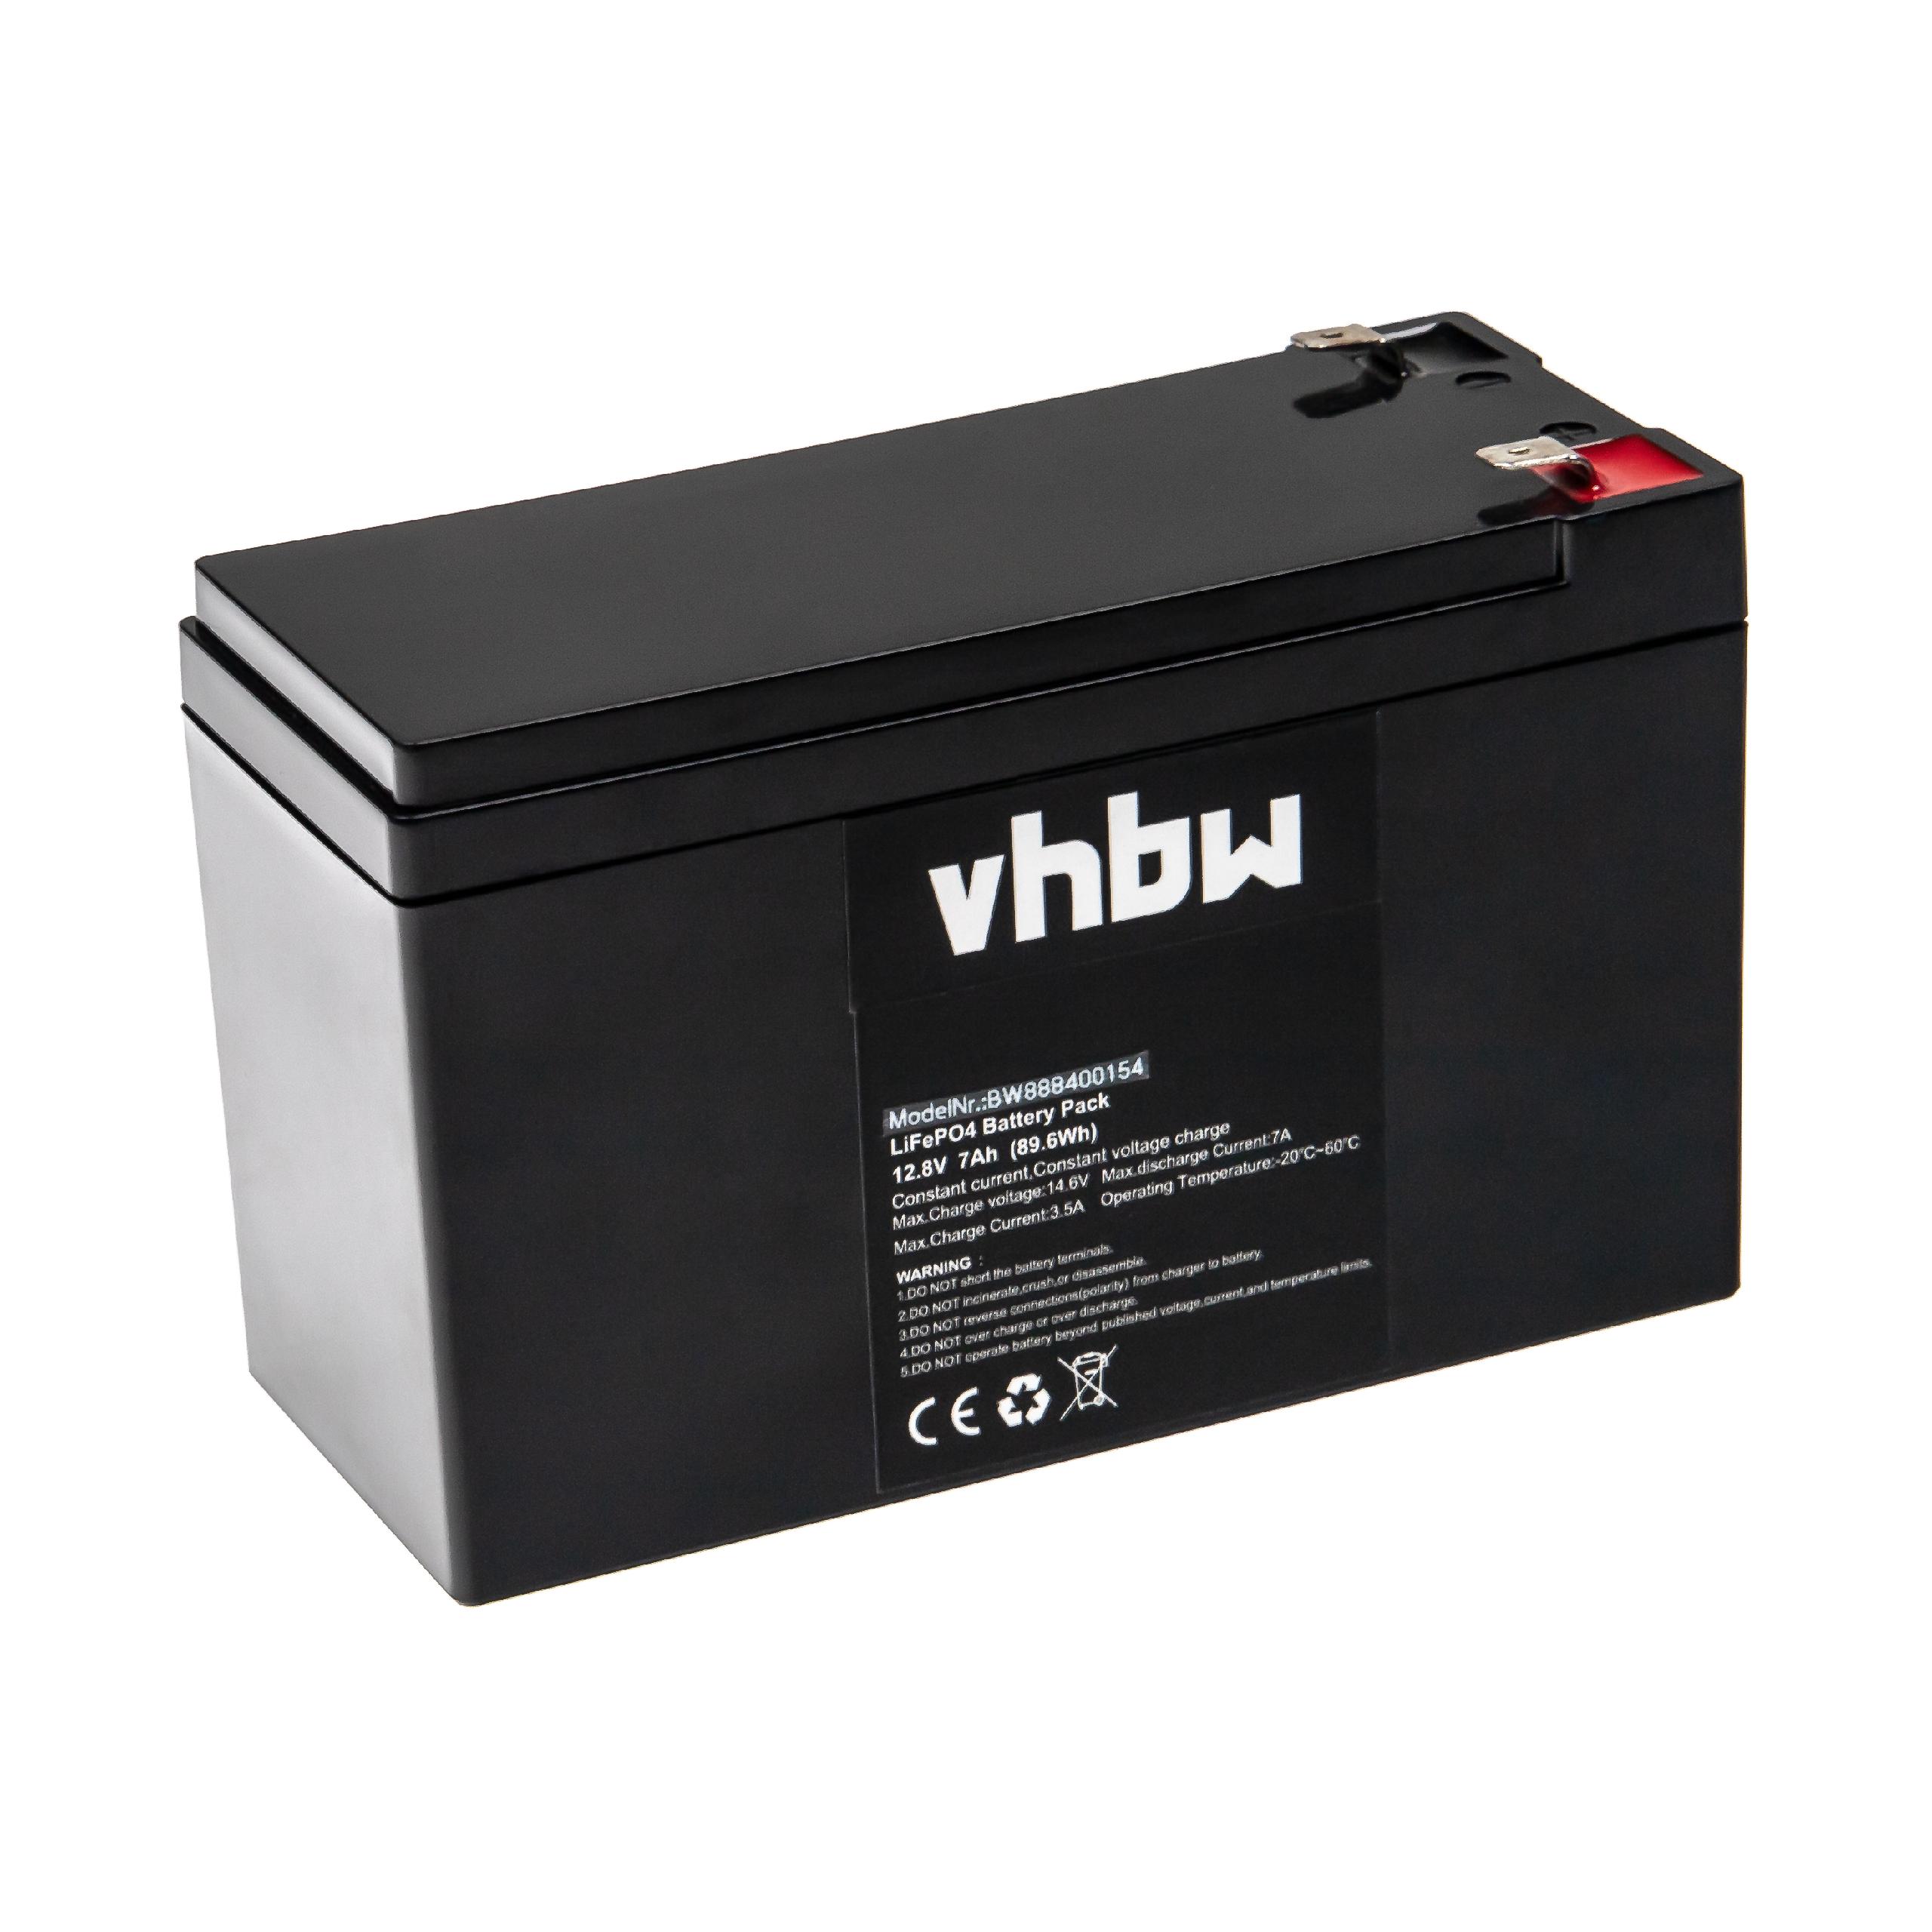 Bordbatterie Akku passend für Wohnmobil, Boot, Solaranlage - 7 Ah 12,8V LiFePO4, 7000mAh, schwarz